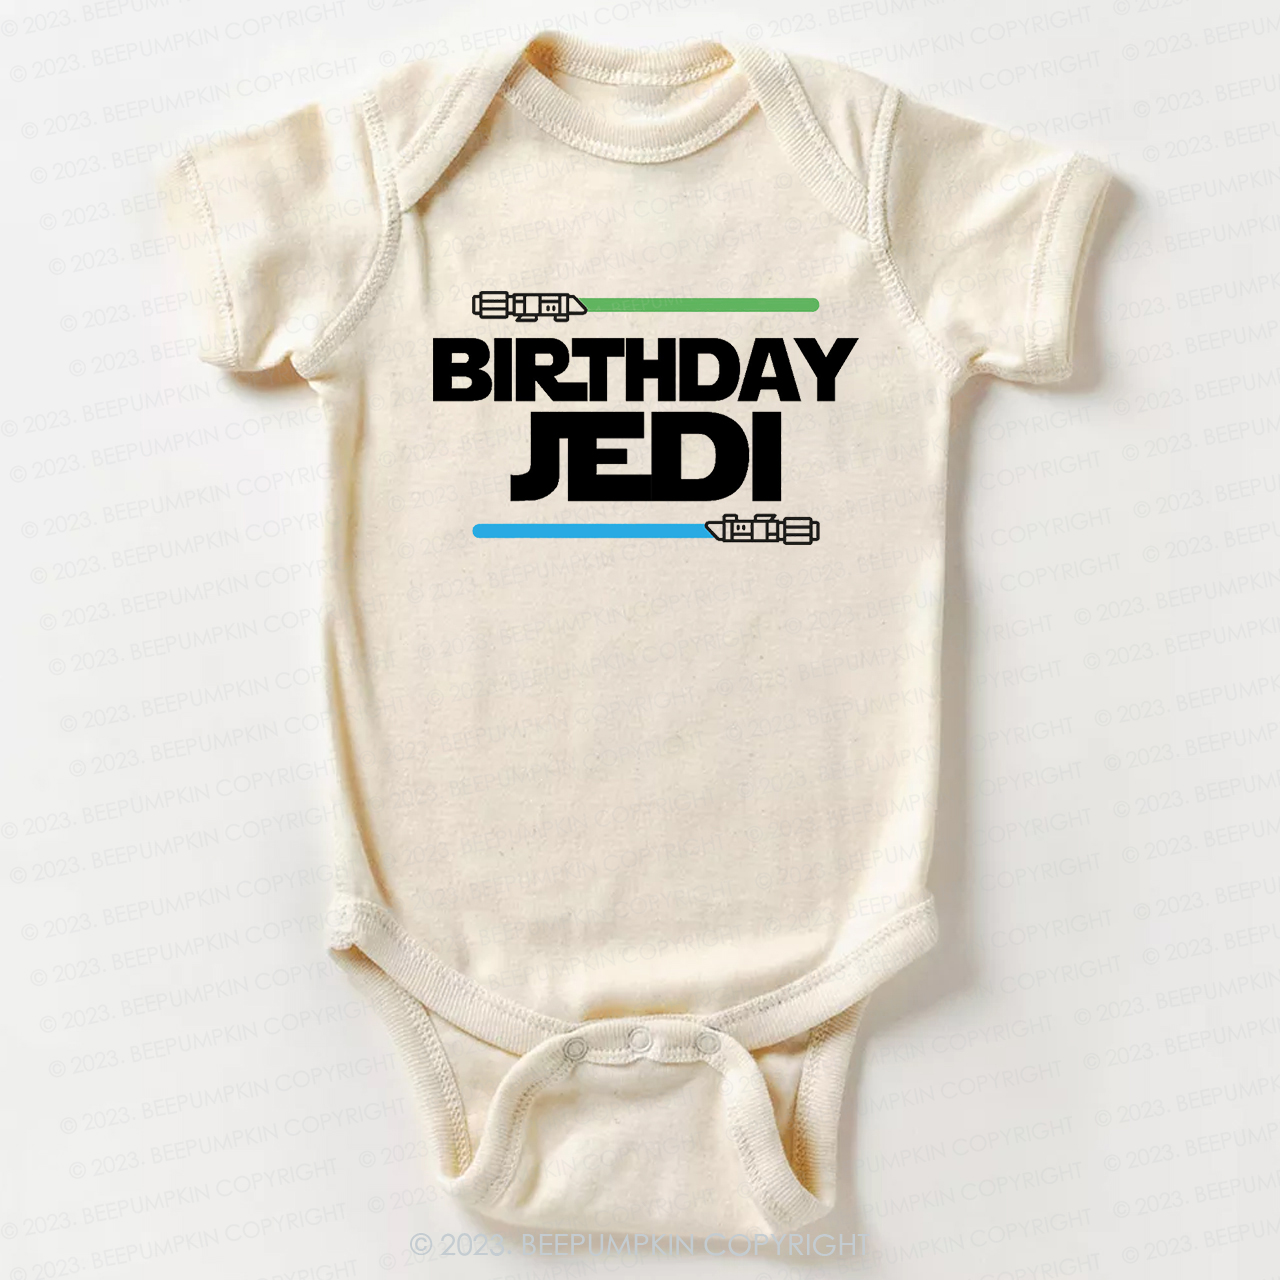 Star Wars Birthday Bodysuit For Baby